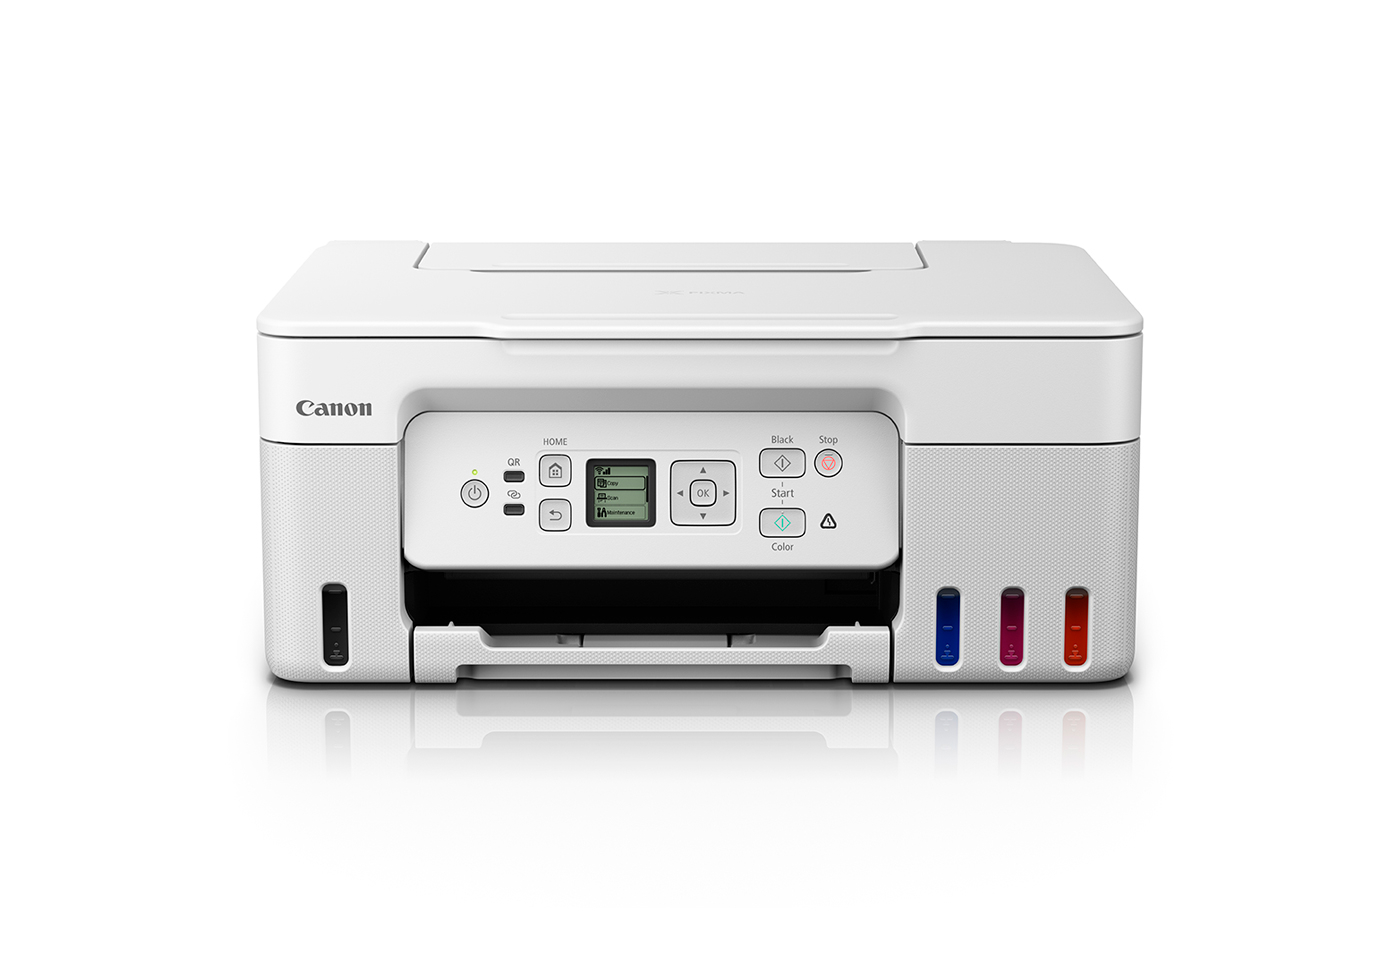 Front profile image of the PIXMA G3675 MegaTank home printer